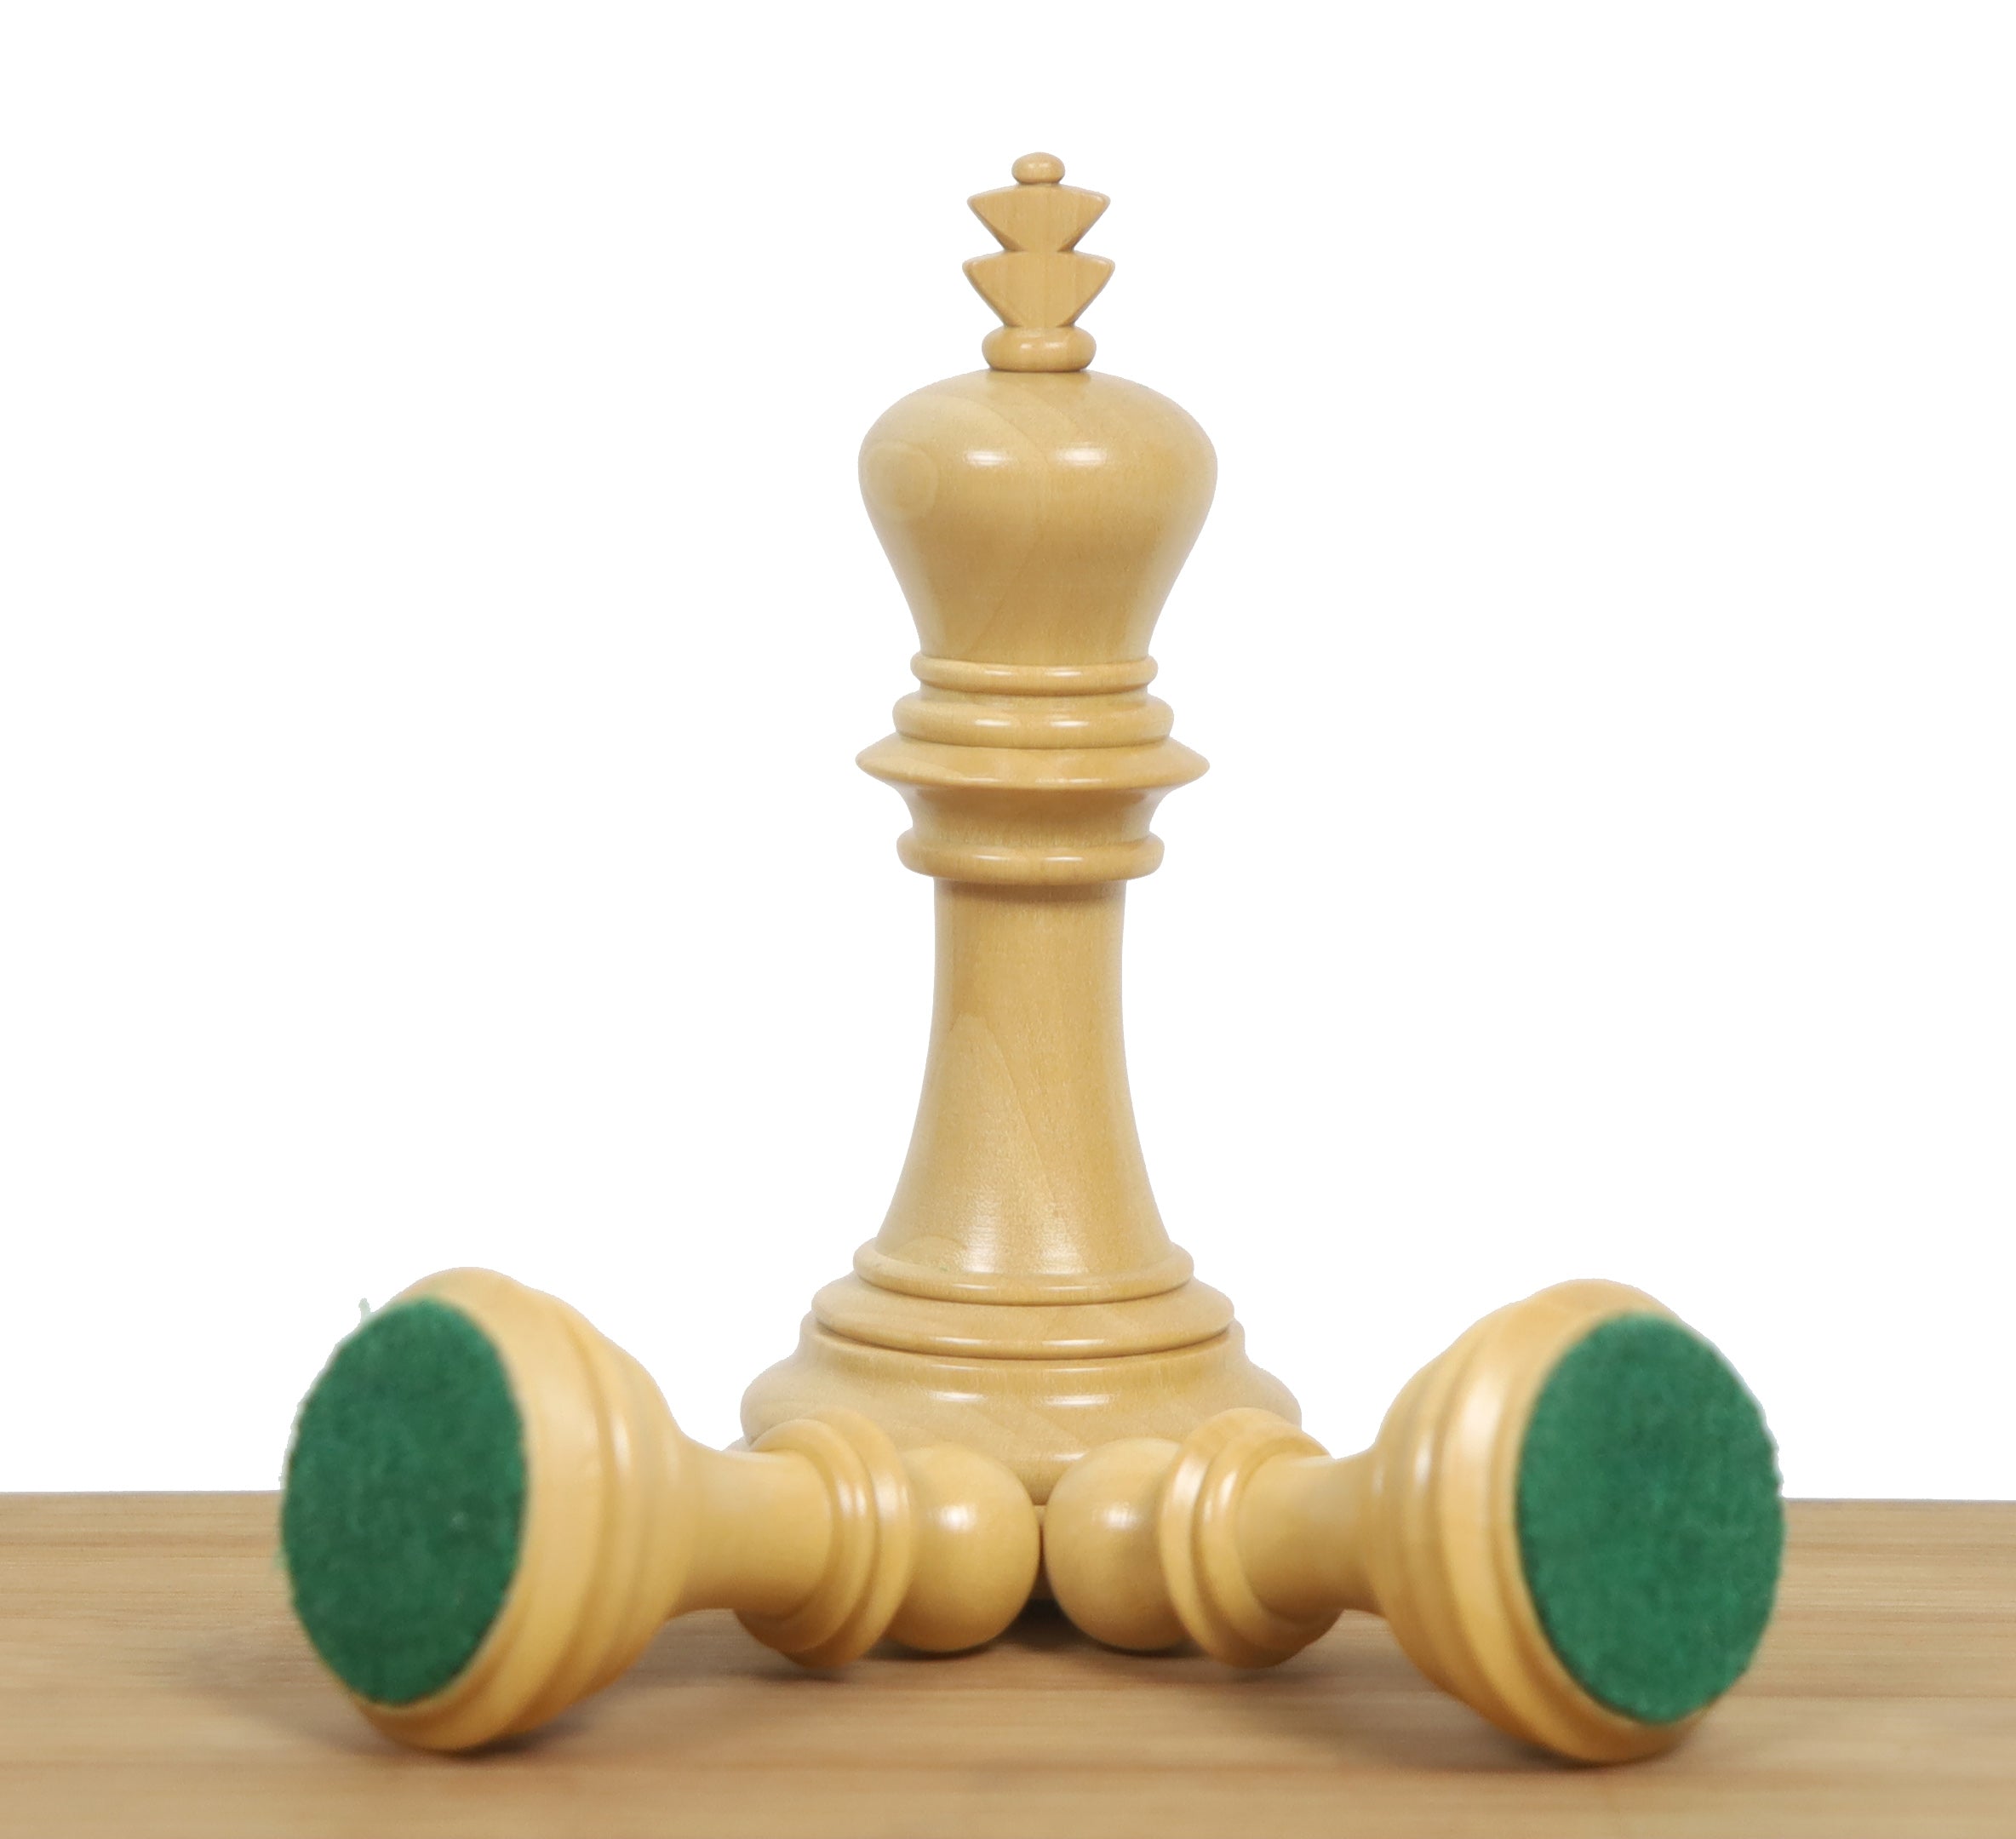 Combo of 3.8" Imperial Staunton Luxury Ebony Wood Chess Pieces with 21" Ebony Chess Board